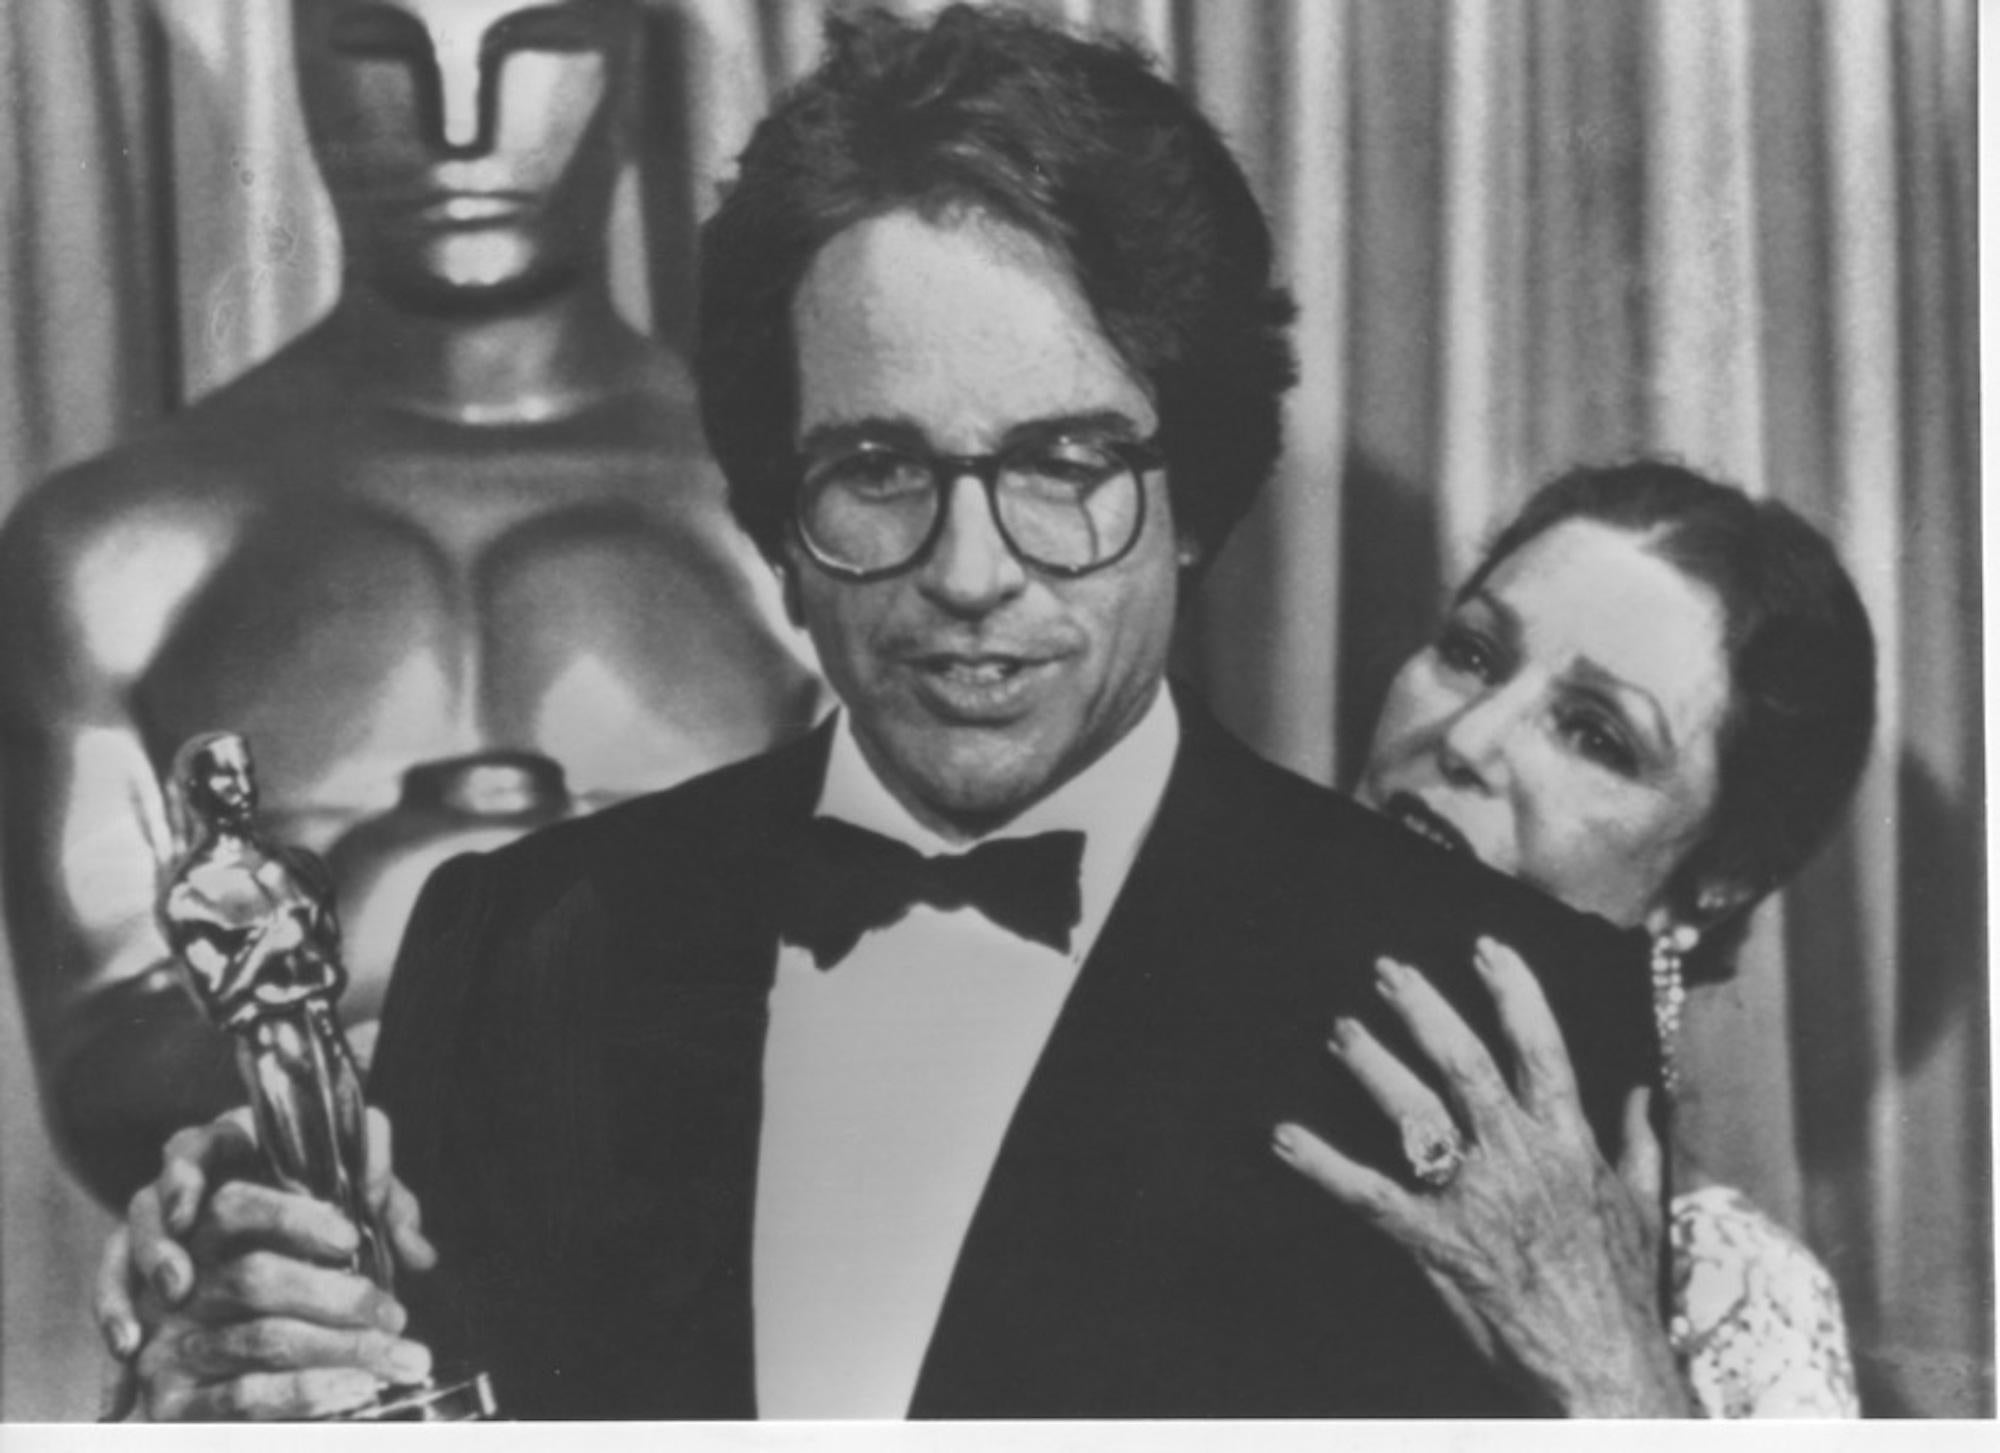 Unknown Figurative Photograph - Portrait of Warren Beatty Winning the Academy Awards  - Vintage Photo - 1982